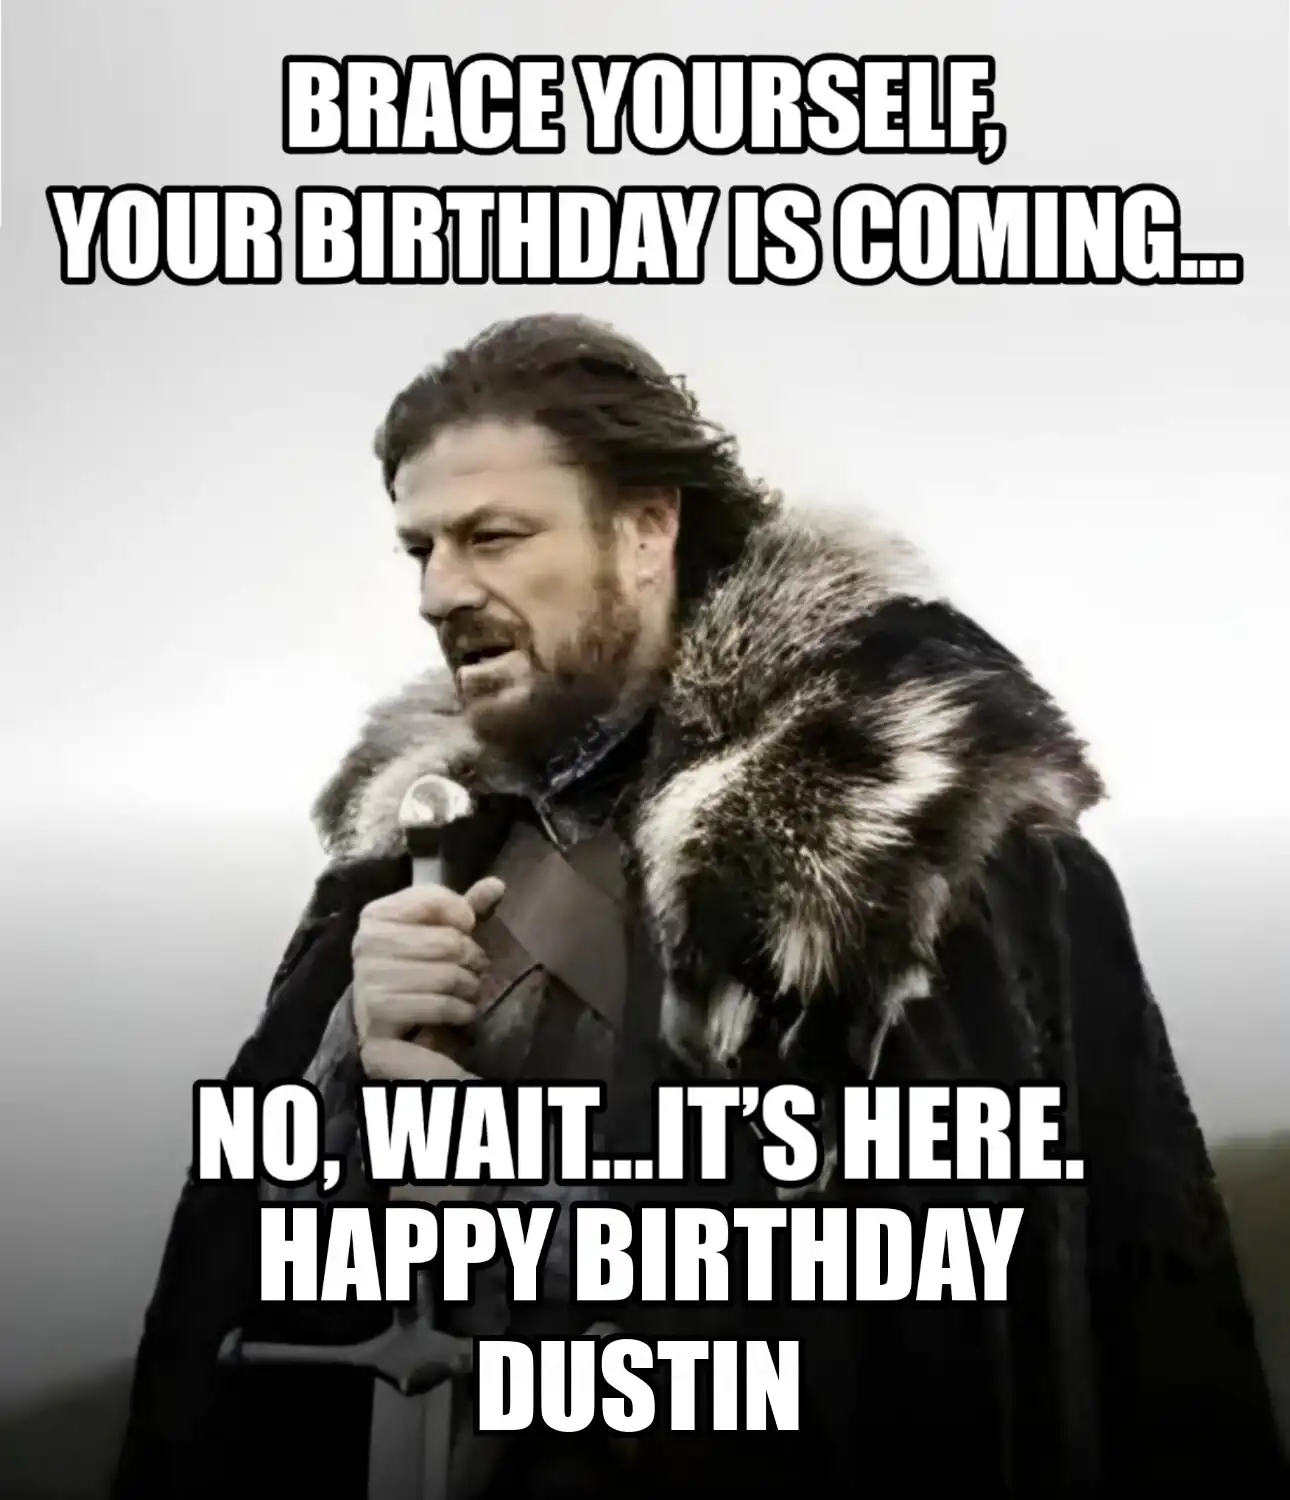 Happy Birthday Dustin Brace Yourself Your Birthday Is Coming Meme